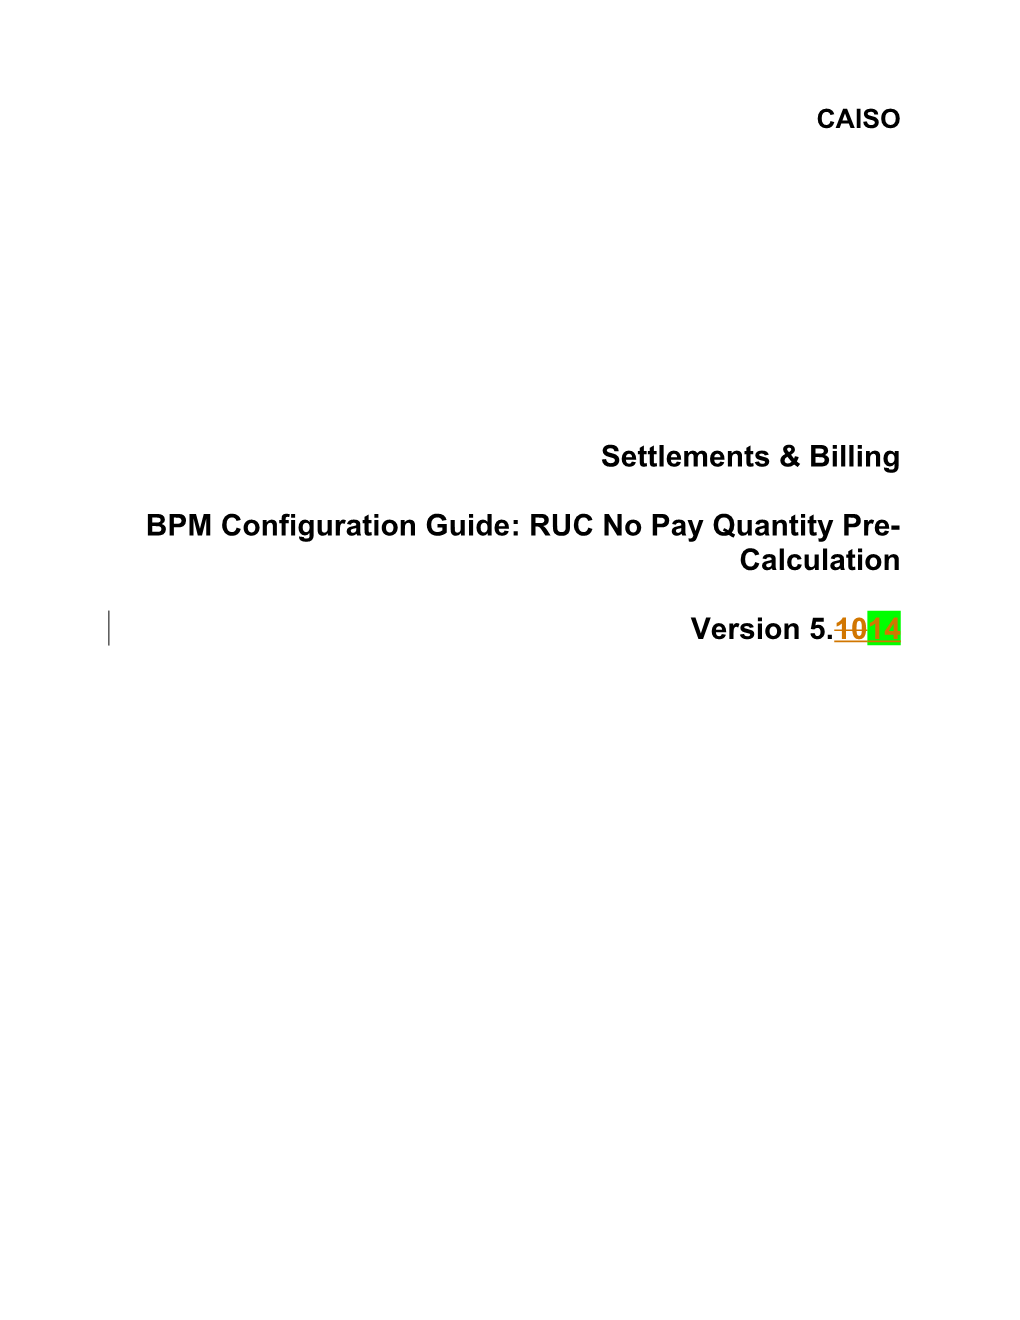 BPM - CG PC RUC No Pay Quantity